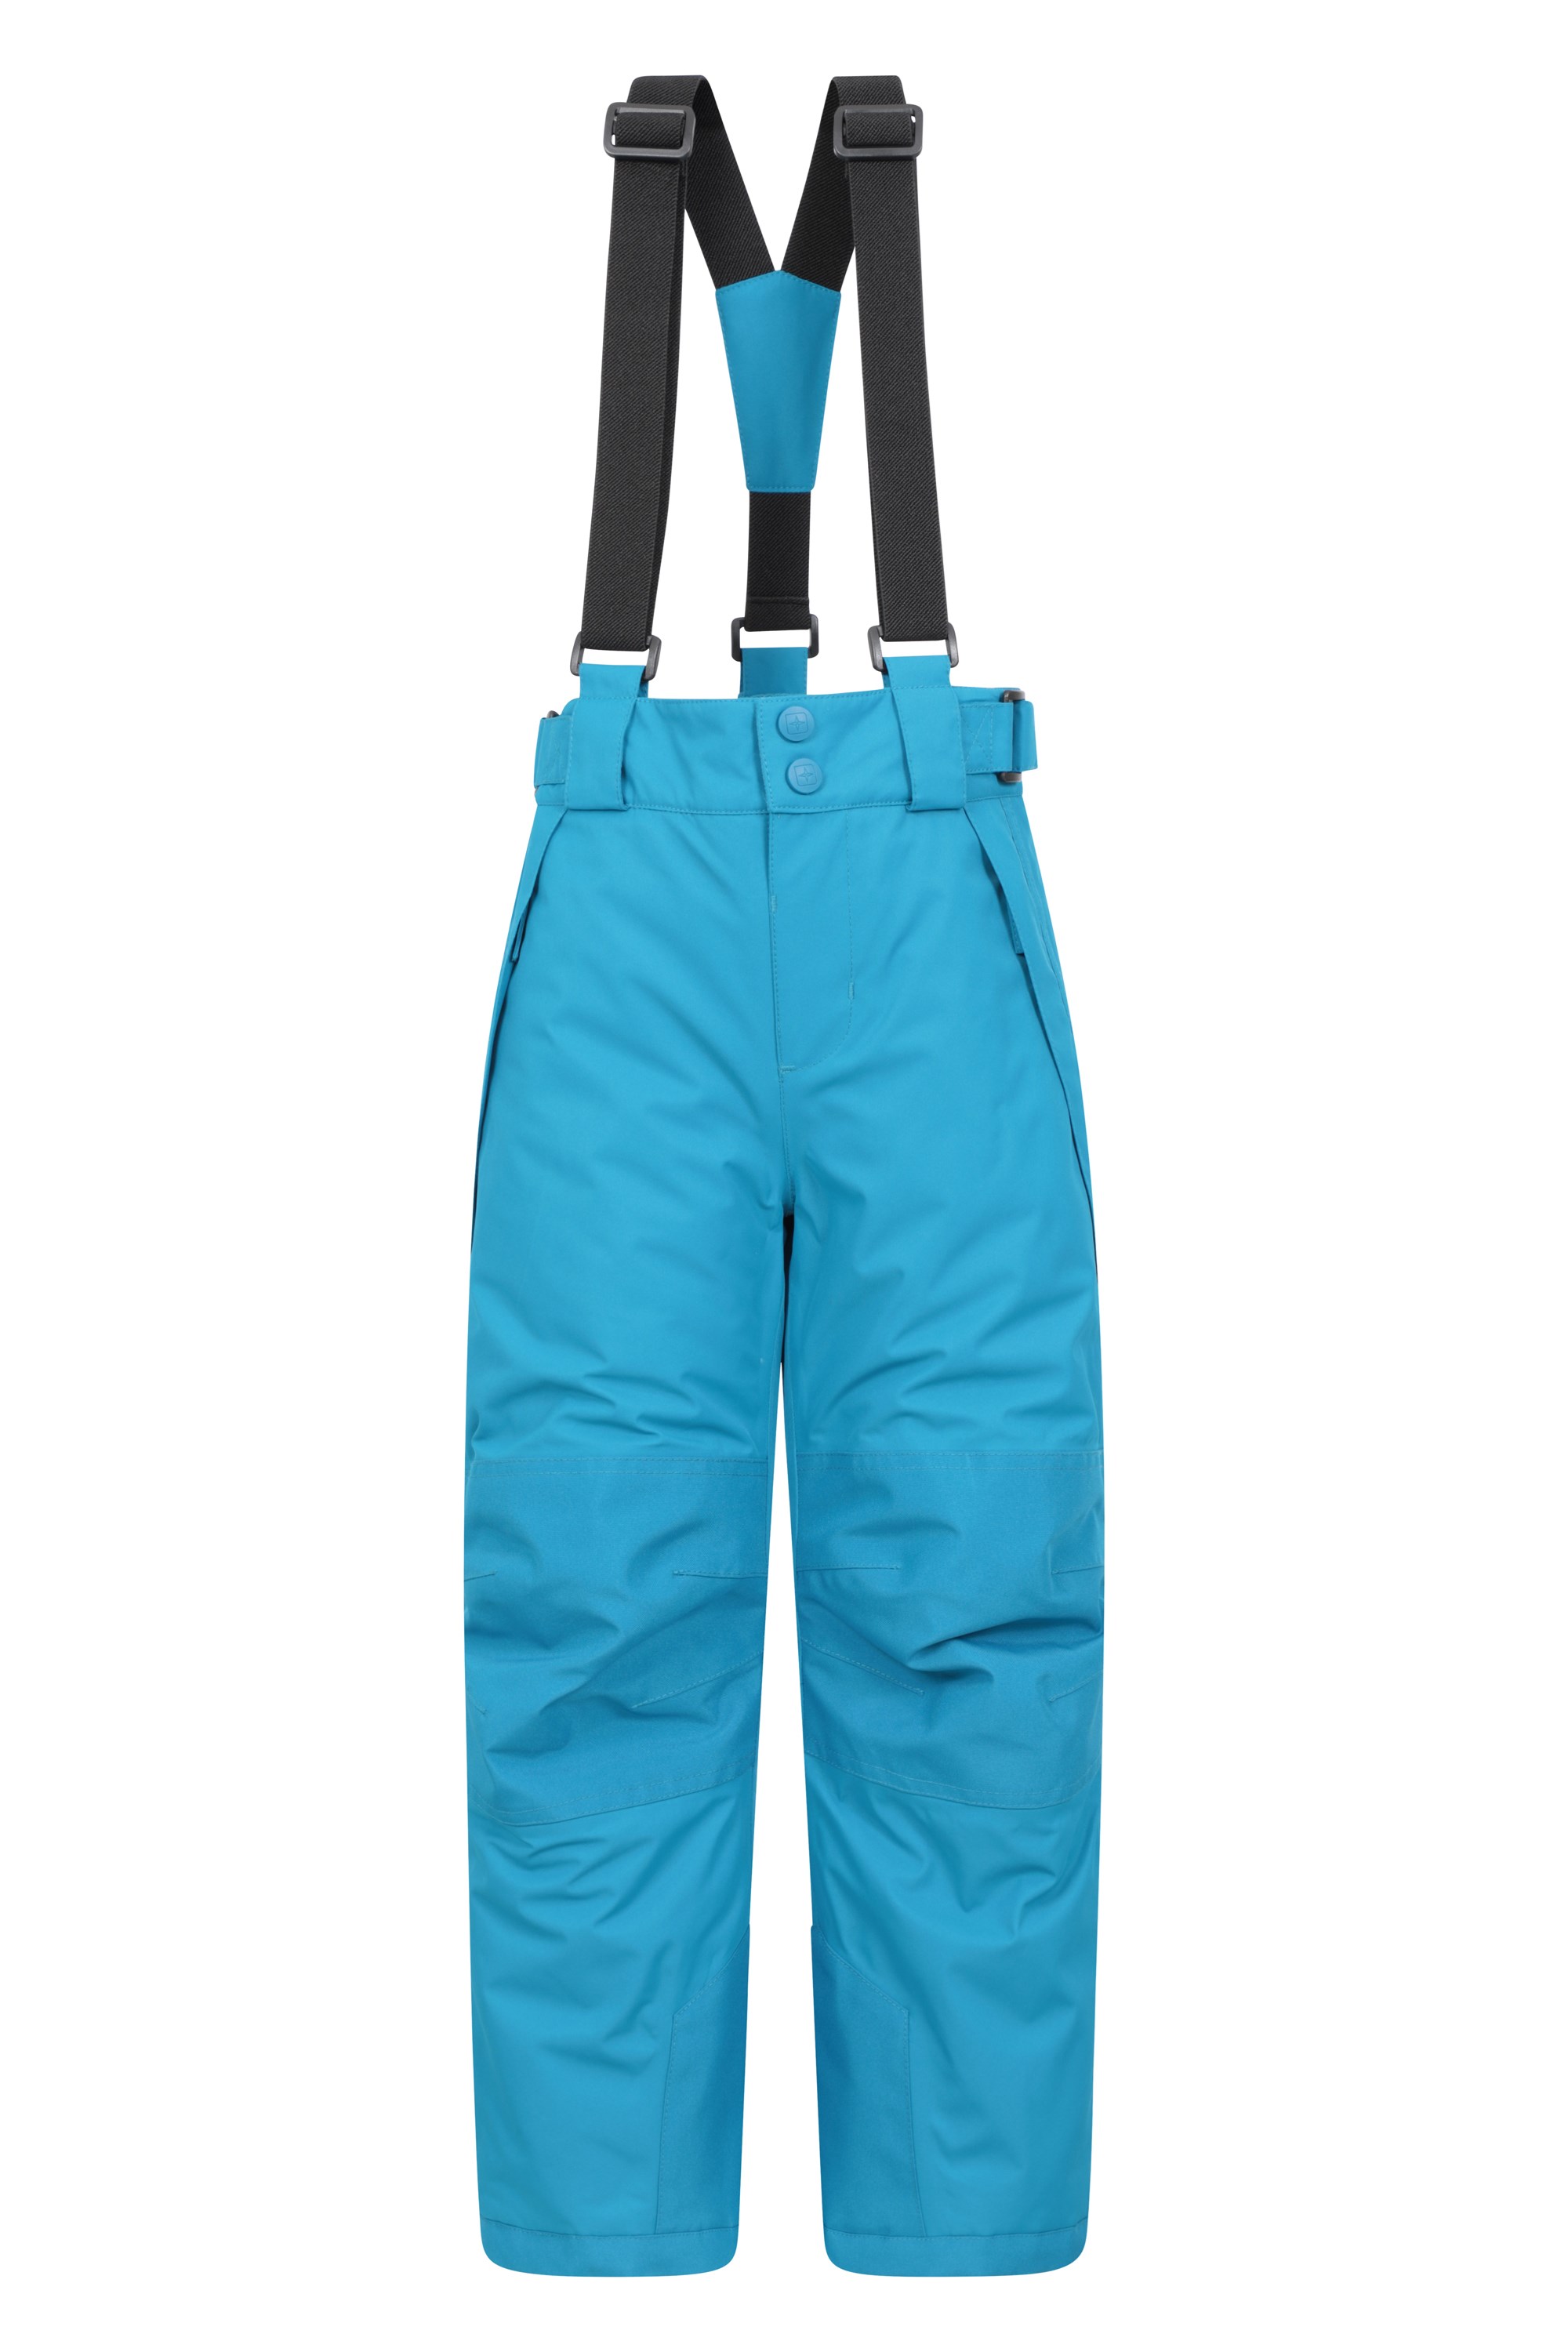 Falcon Extreme Kids Waterproof Ski Pants - Light Blue